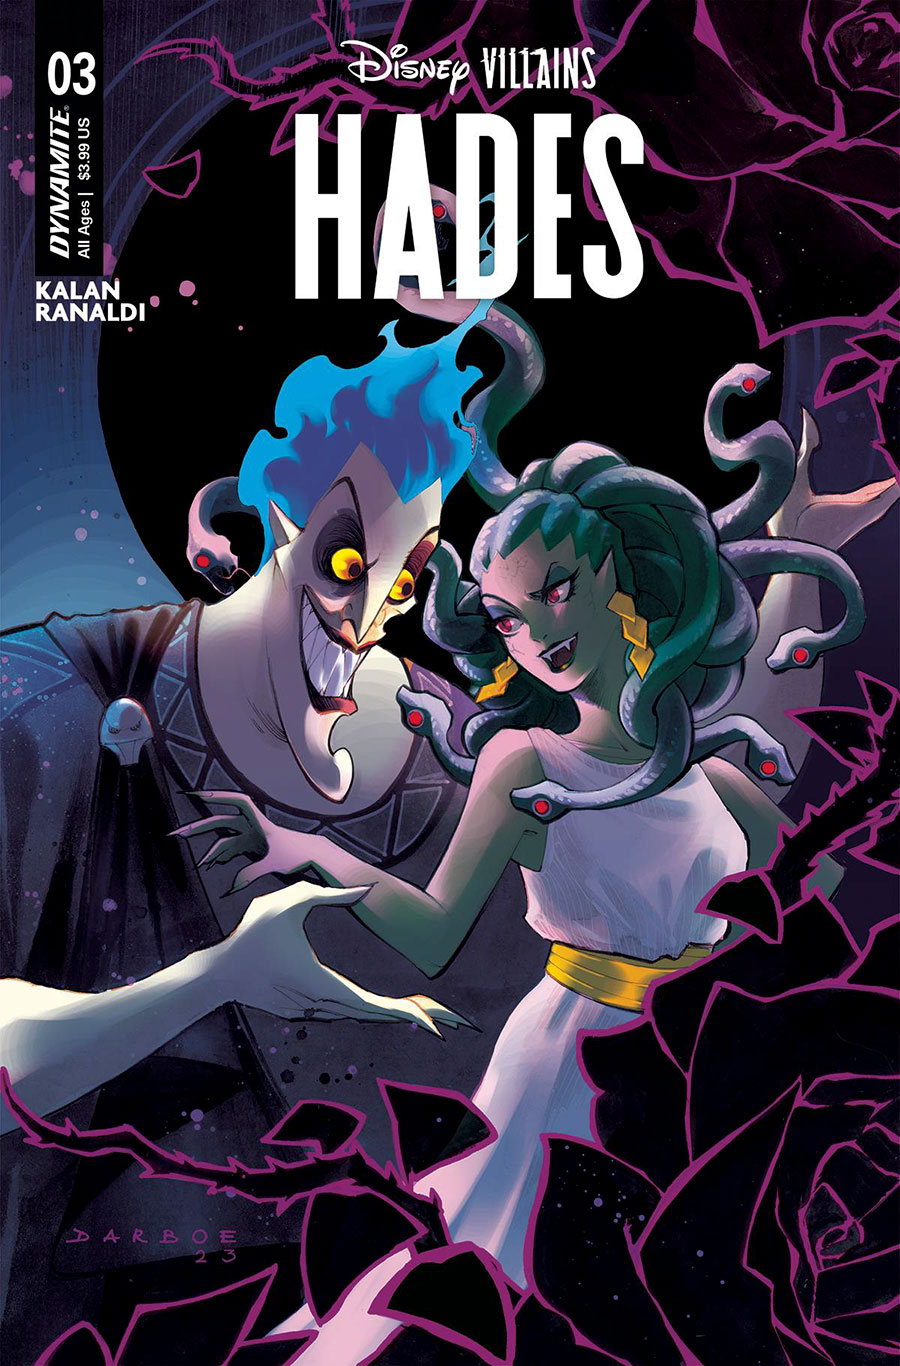 Disney Villains Hades #3 Cover A Regular Karen S Darboe Cover